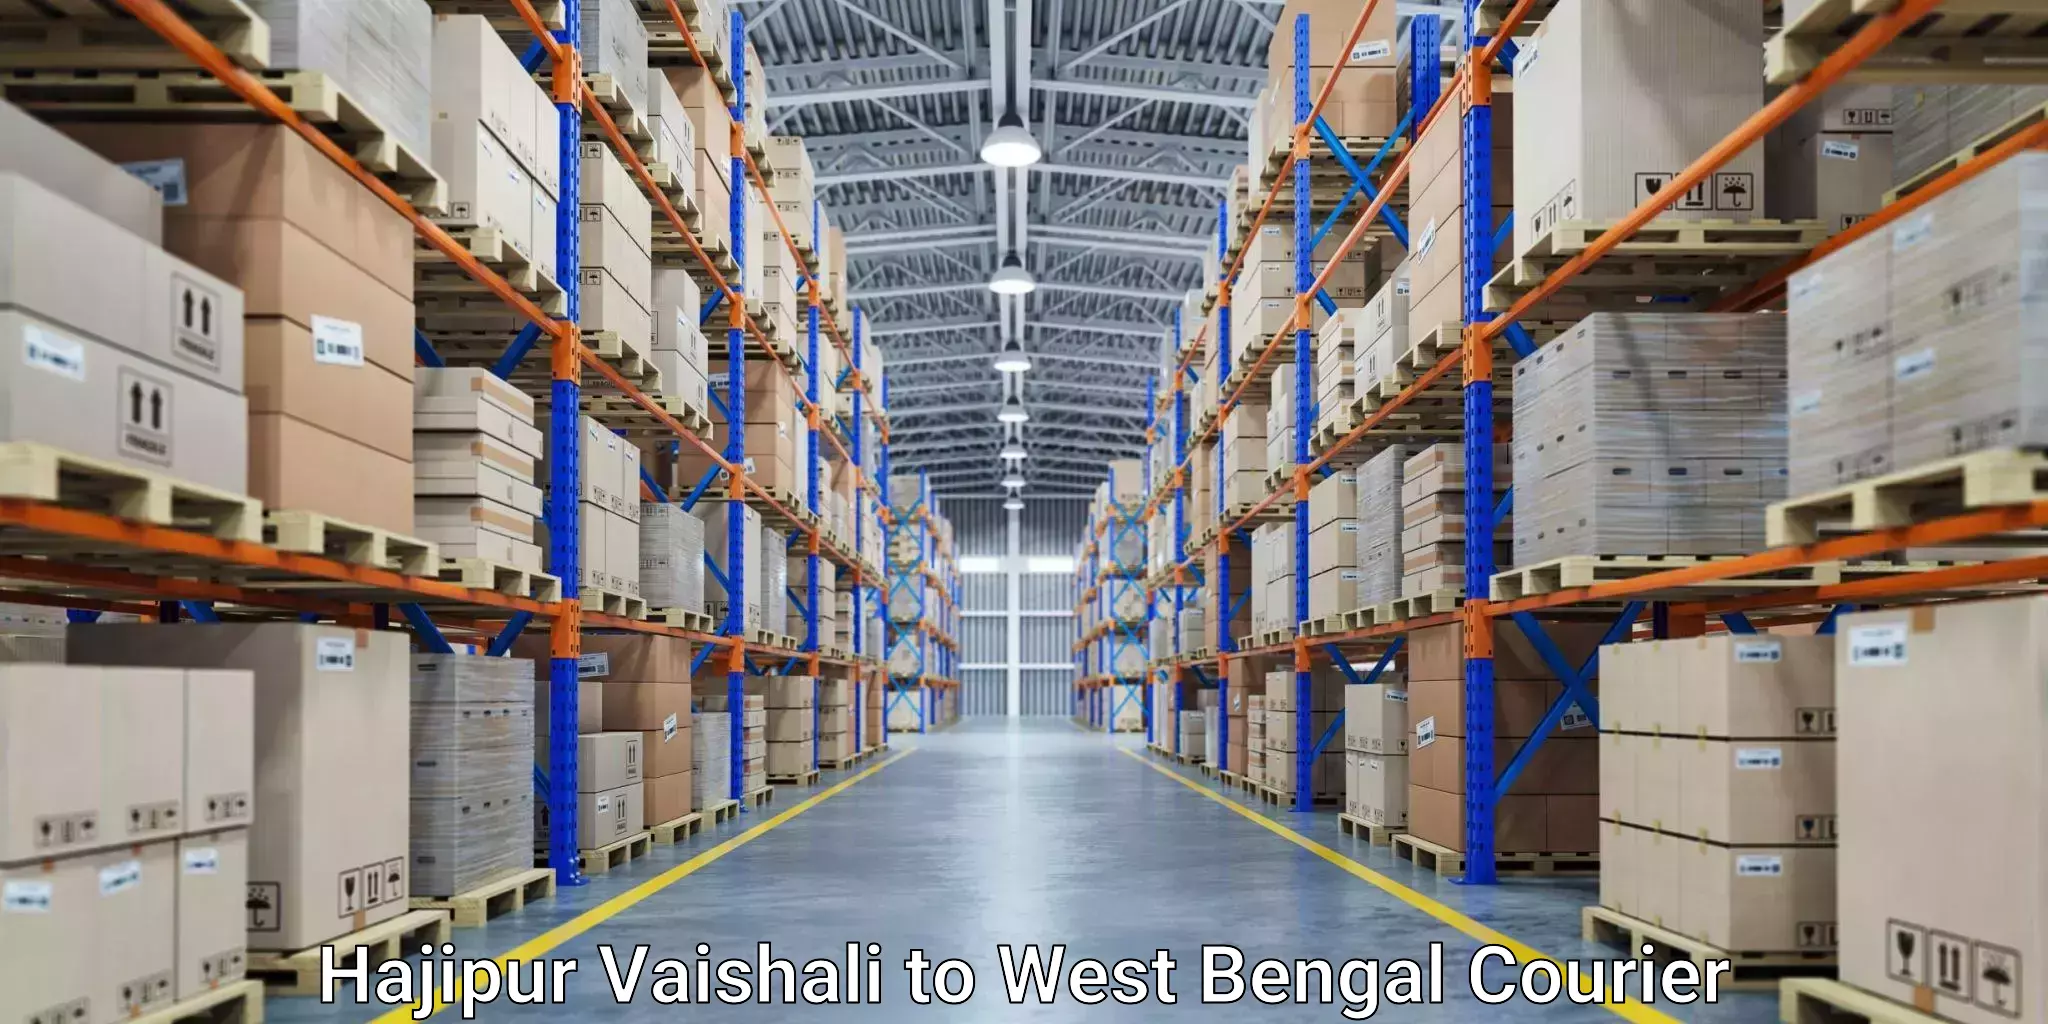 Package delivery network Hajipur Vaishali to IIIT Kalyani